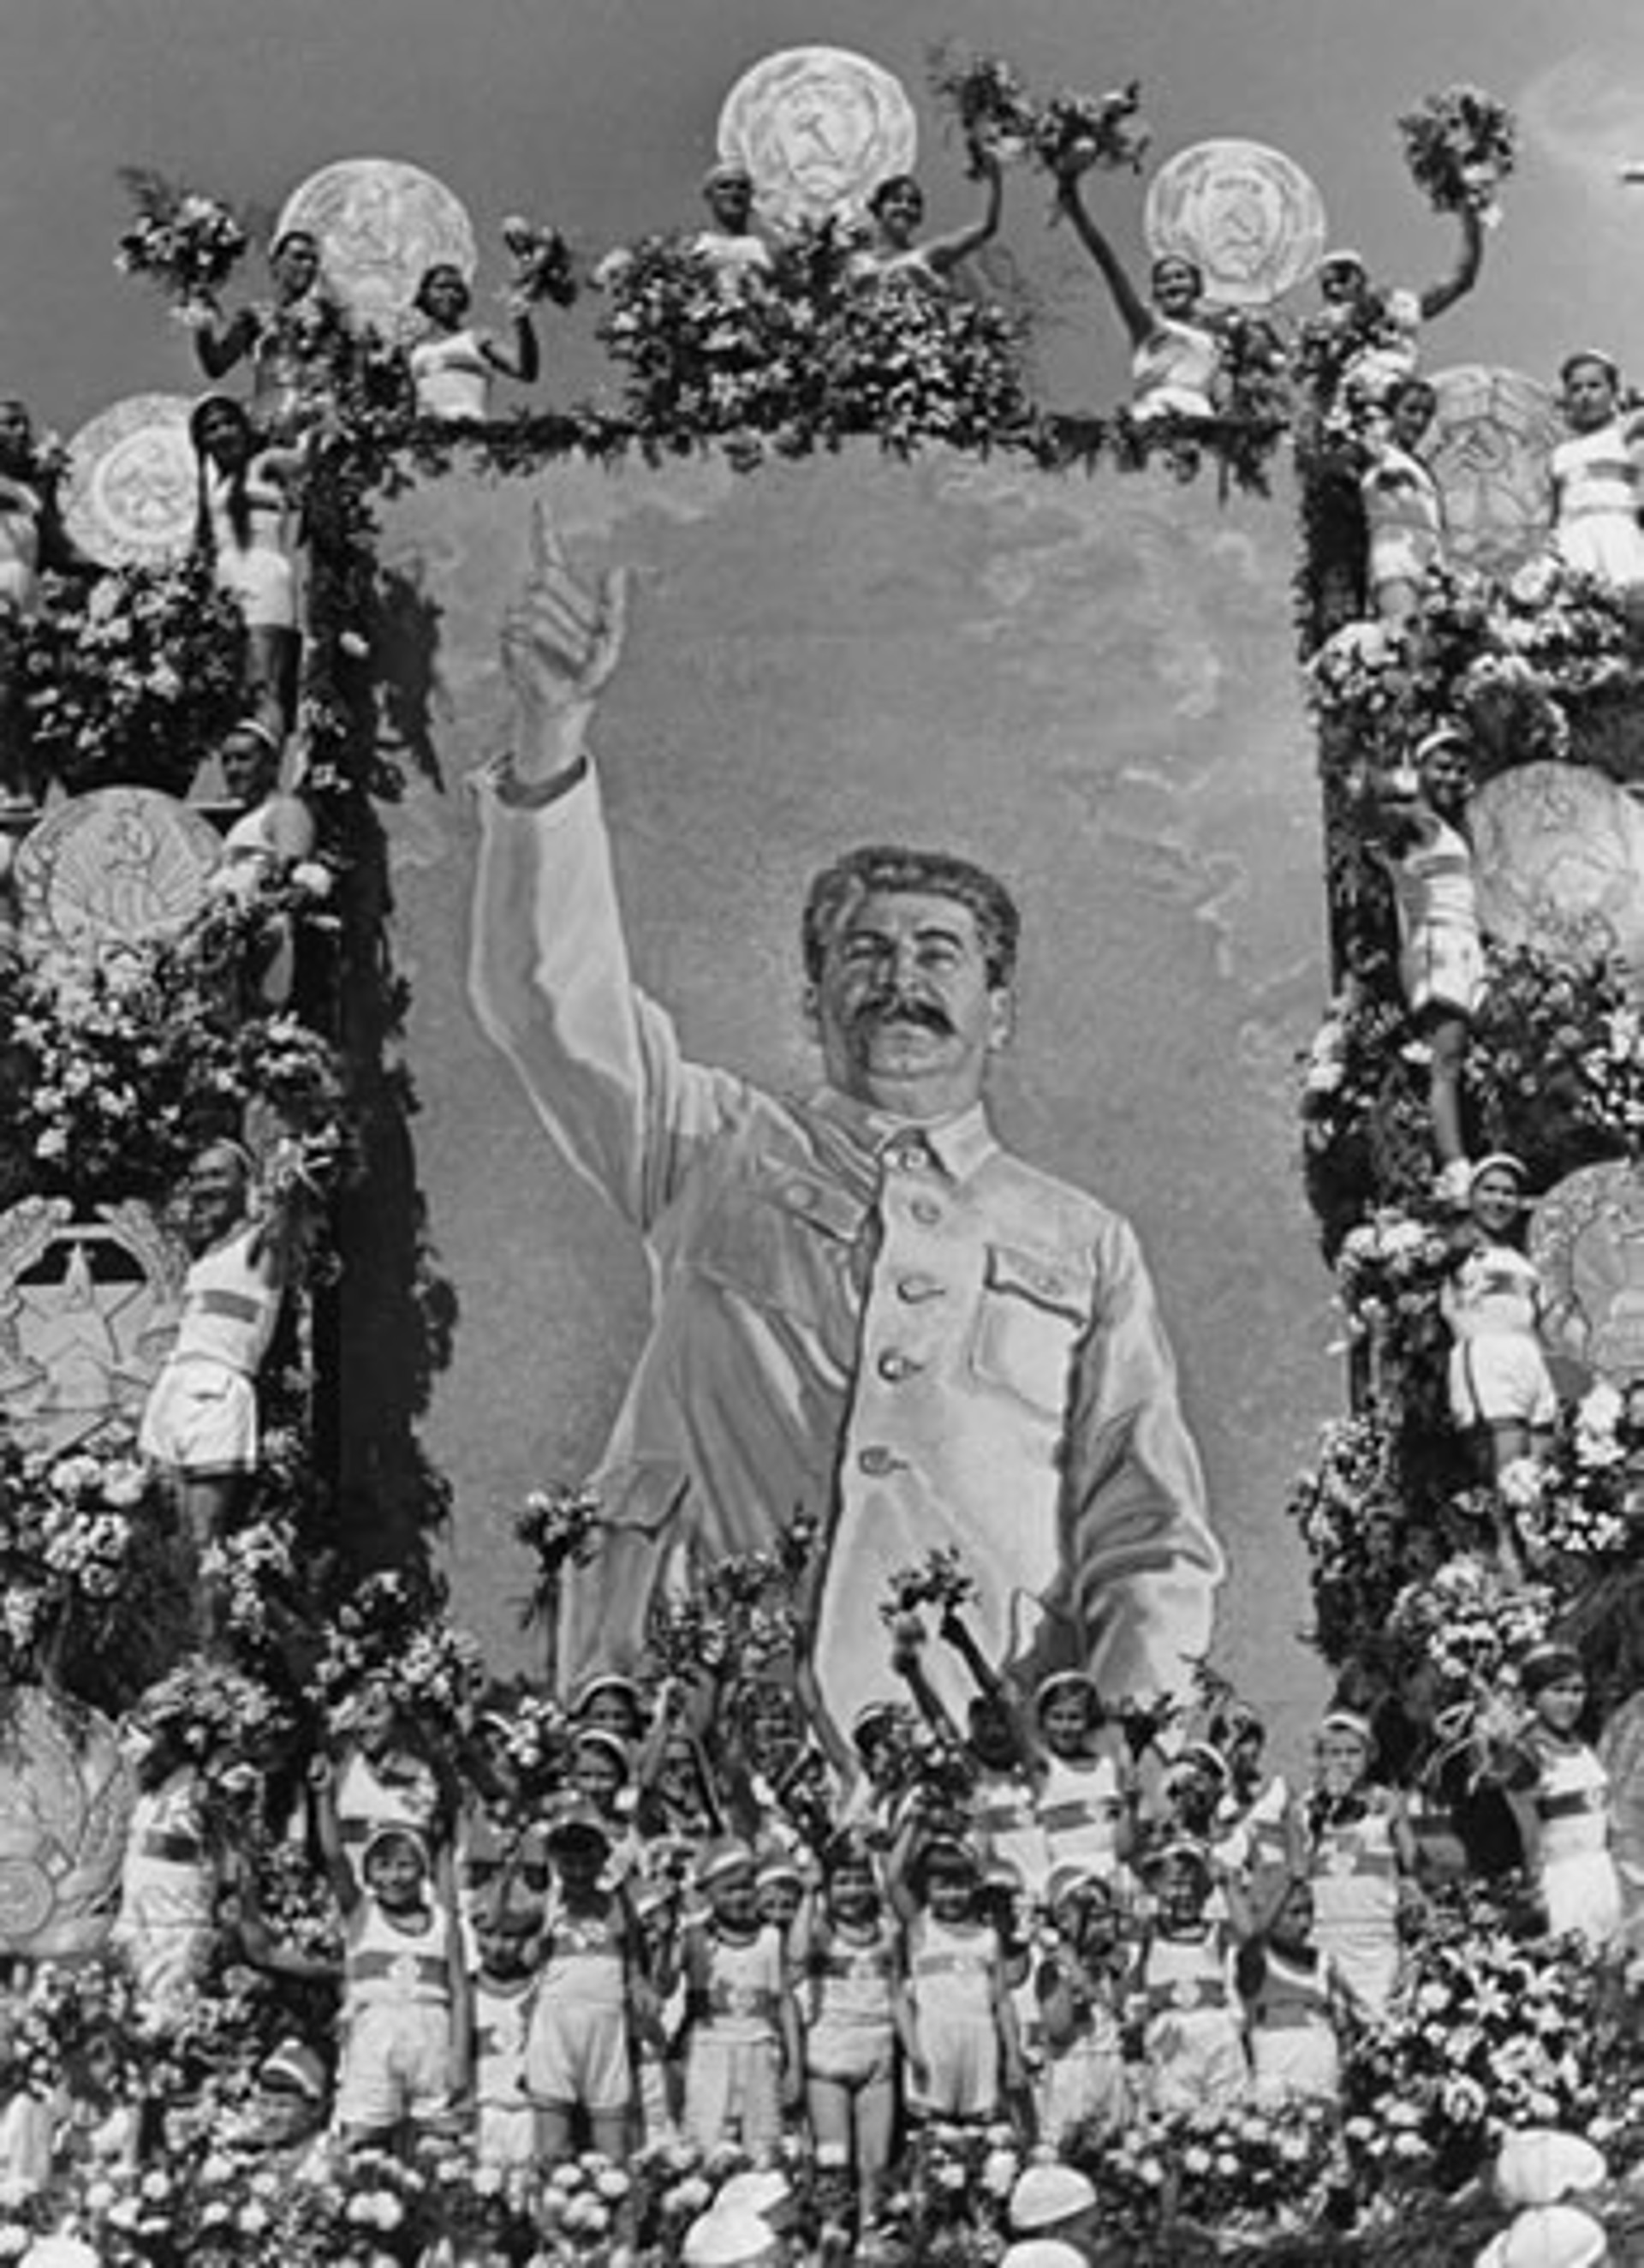 Giant Portrait of Stalin and Russian Youth by Samariy Gurariy